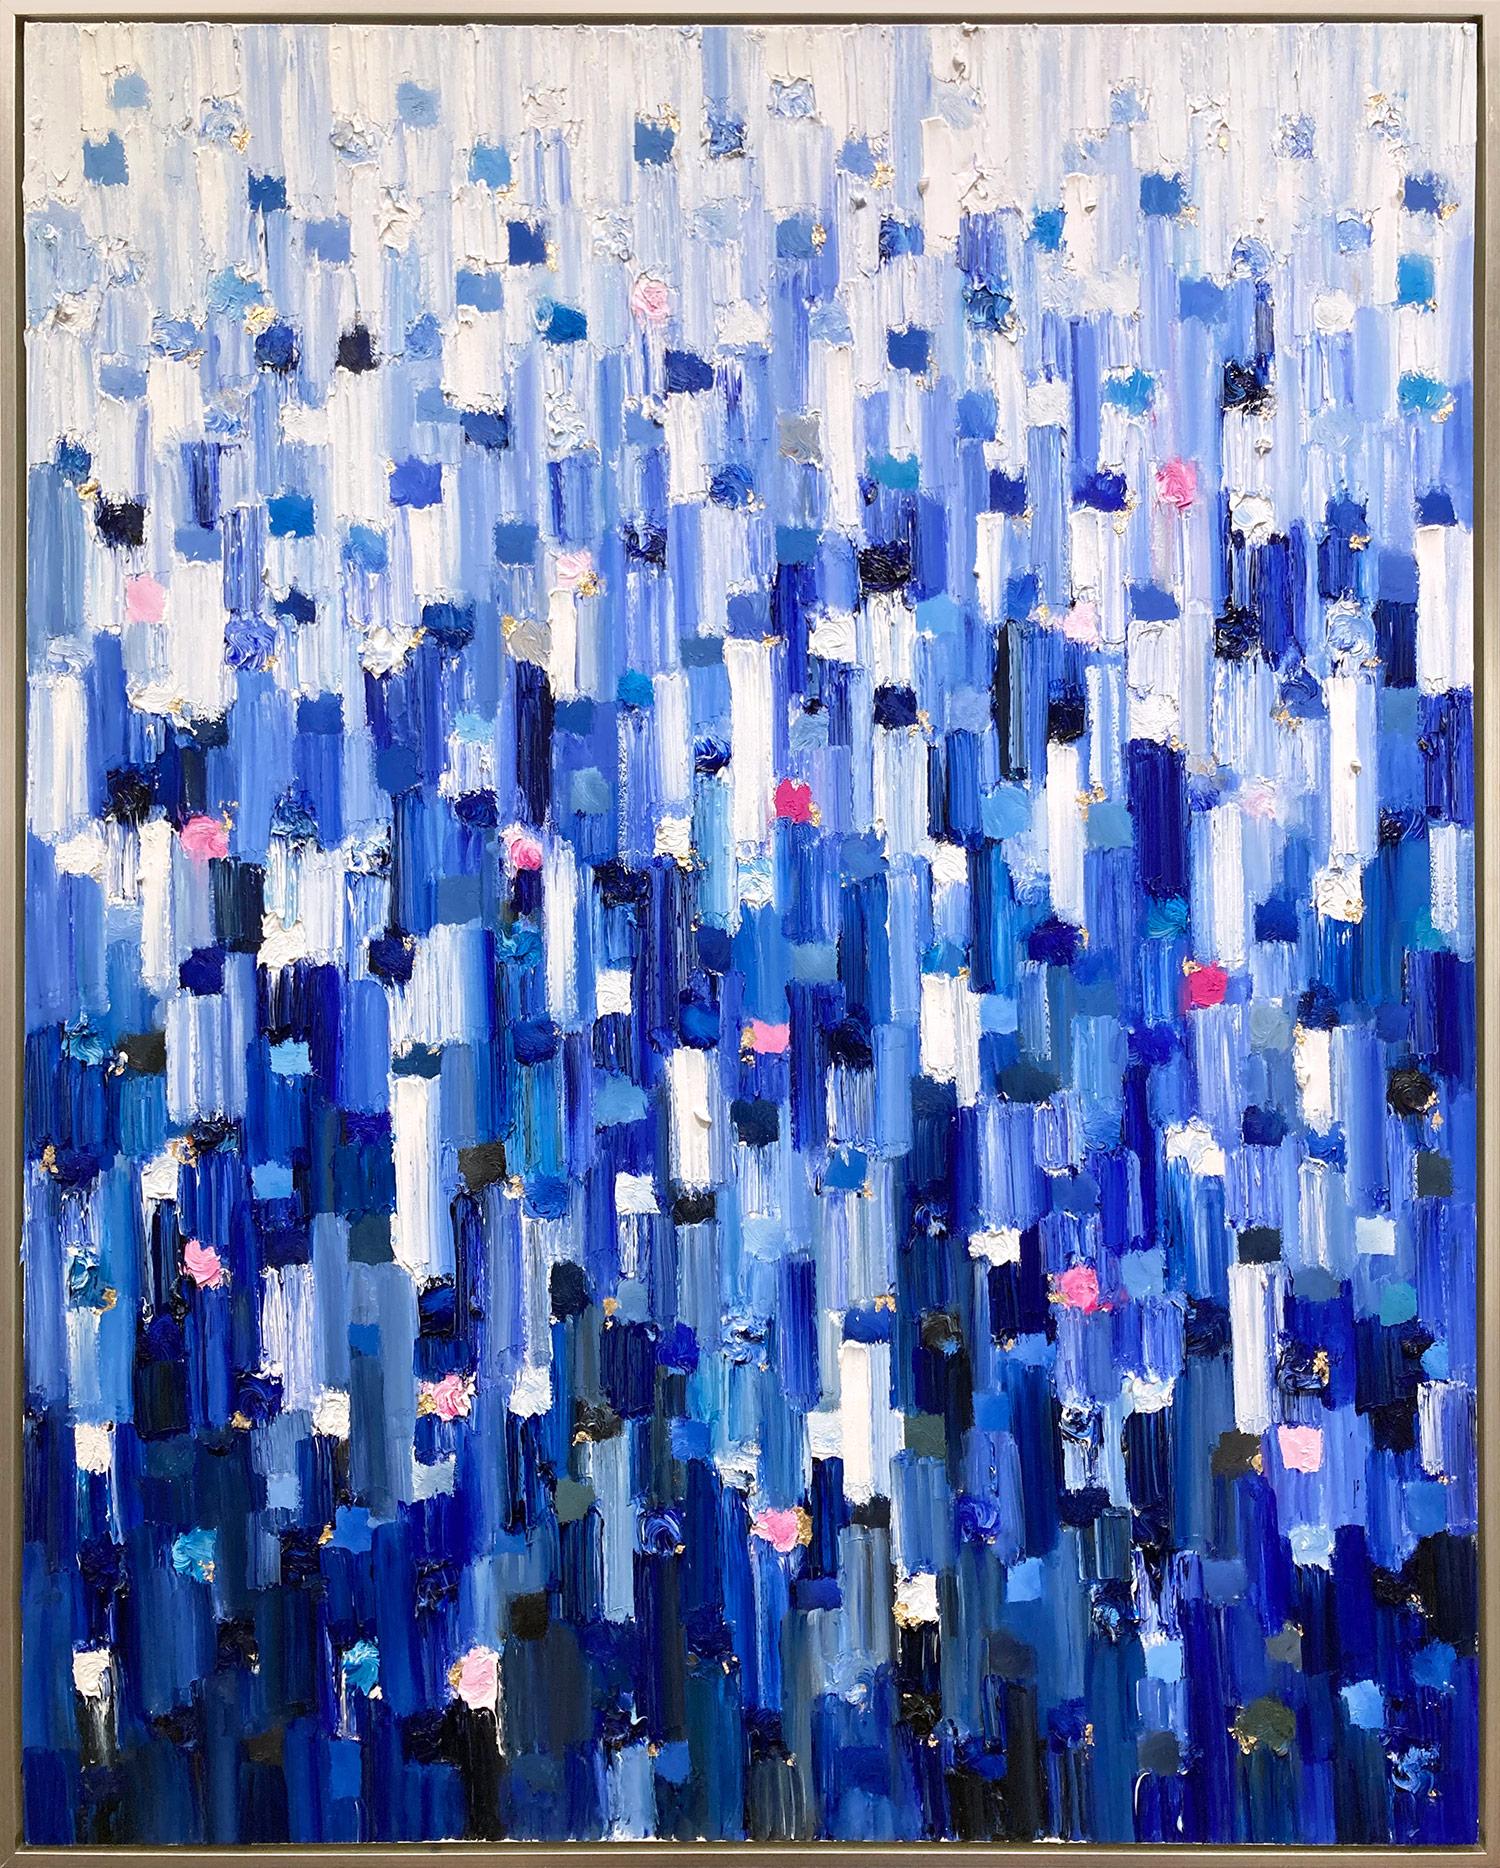 Abstract Painting Cindy Shaoul - "Dripping Dots - Gramercy" Peinture à l'huile abstraite colorée sur toile